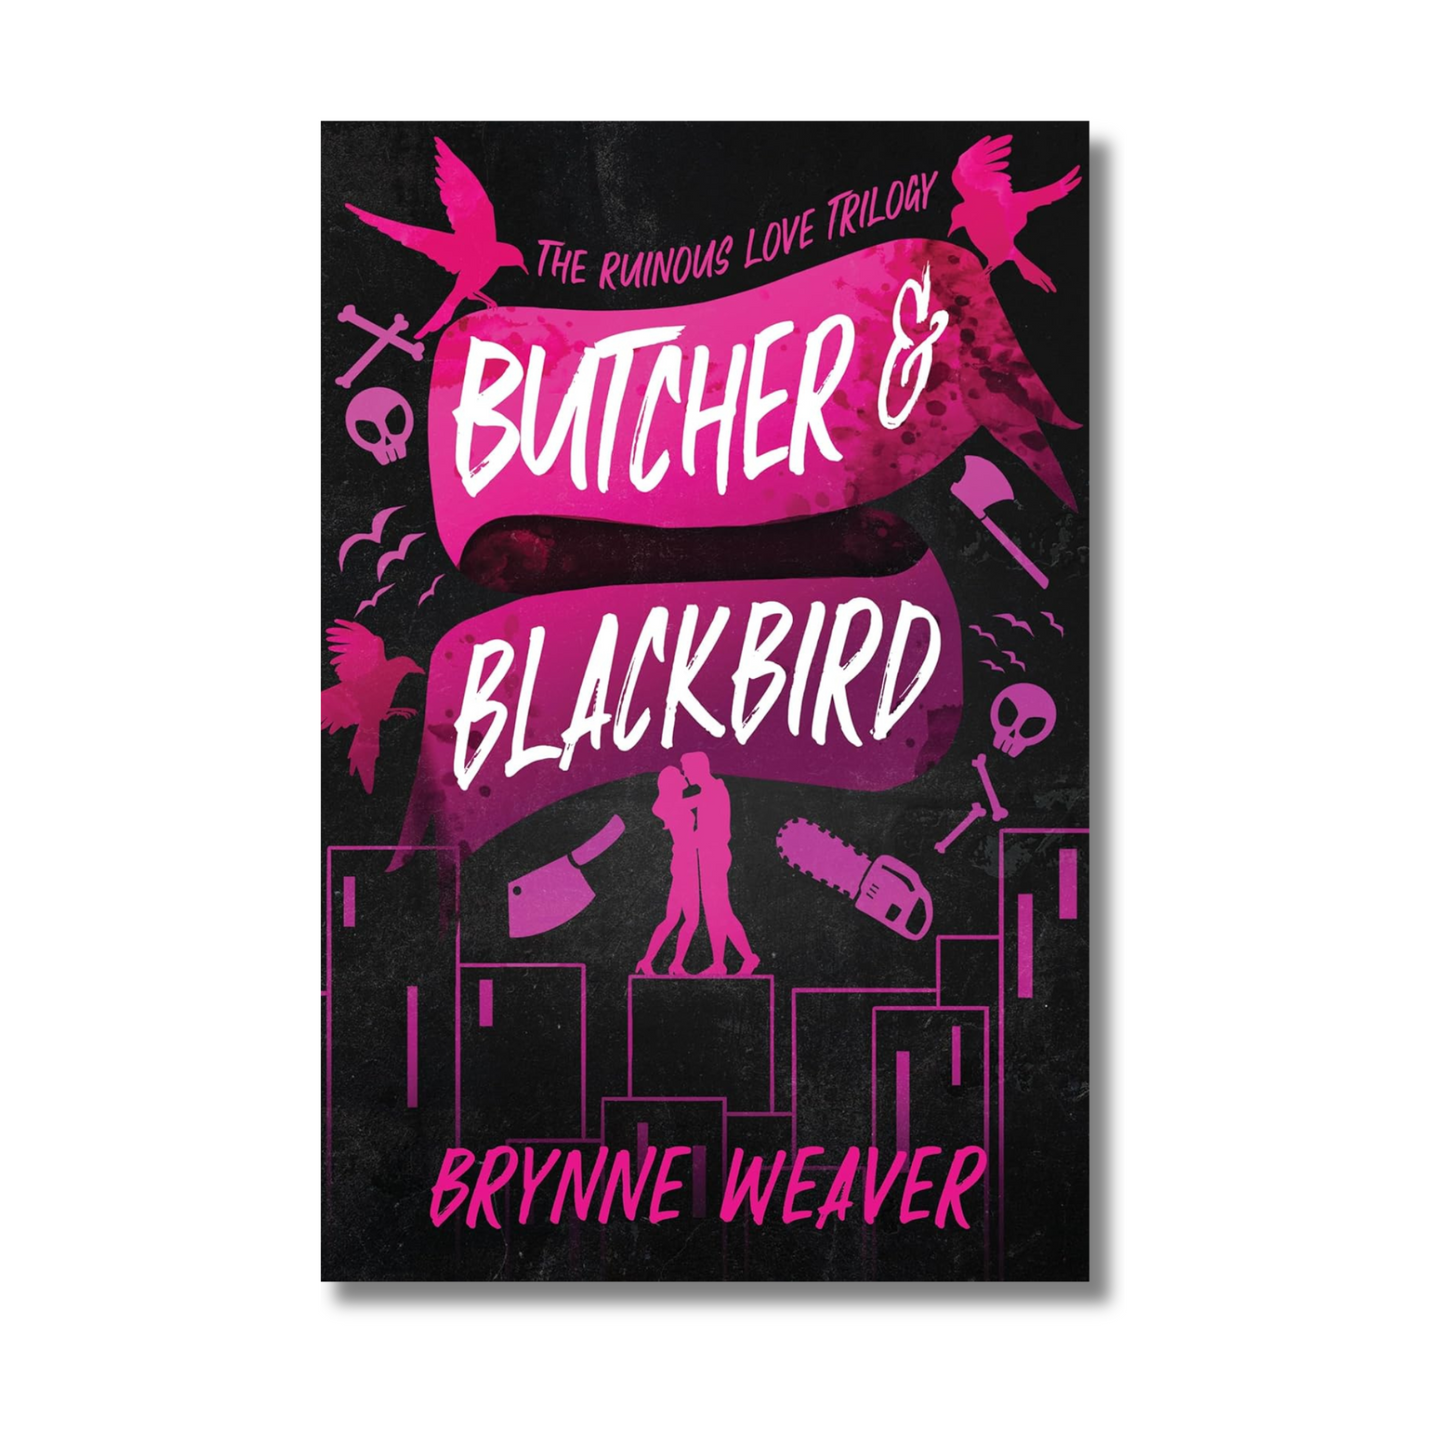 Butcher & Blackbird: The Ruinous Love Trilogy #1 By Brynne Weaver (Paperback)